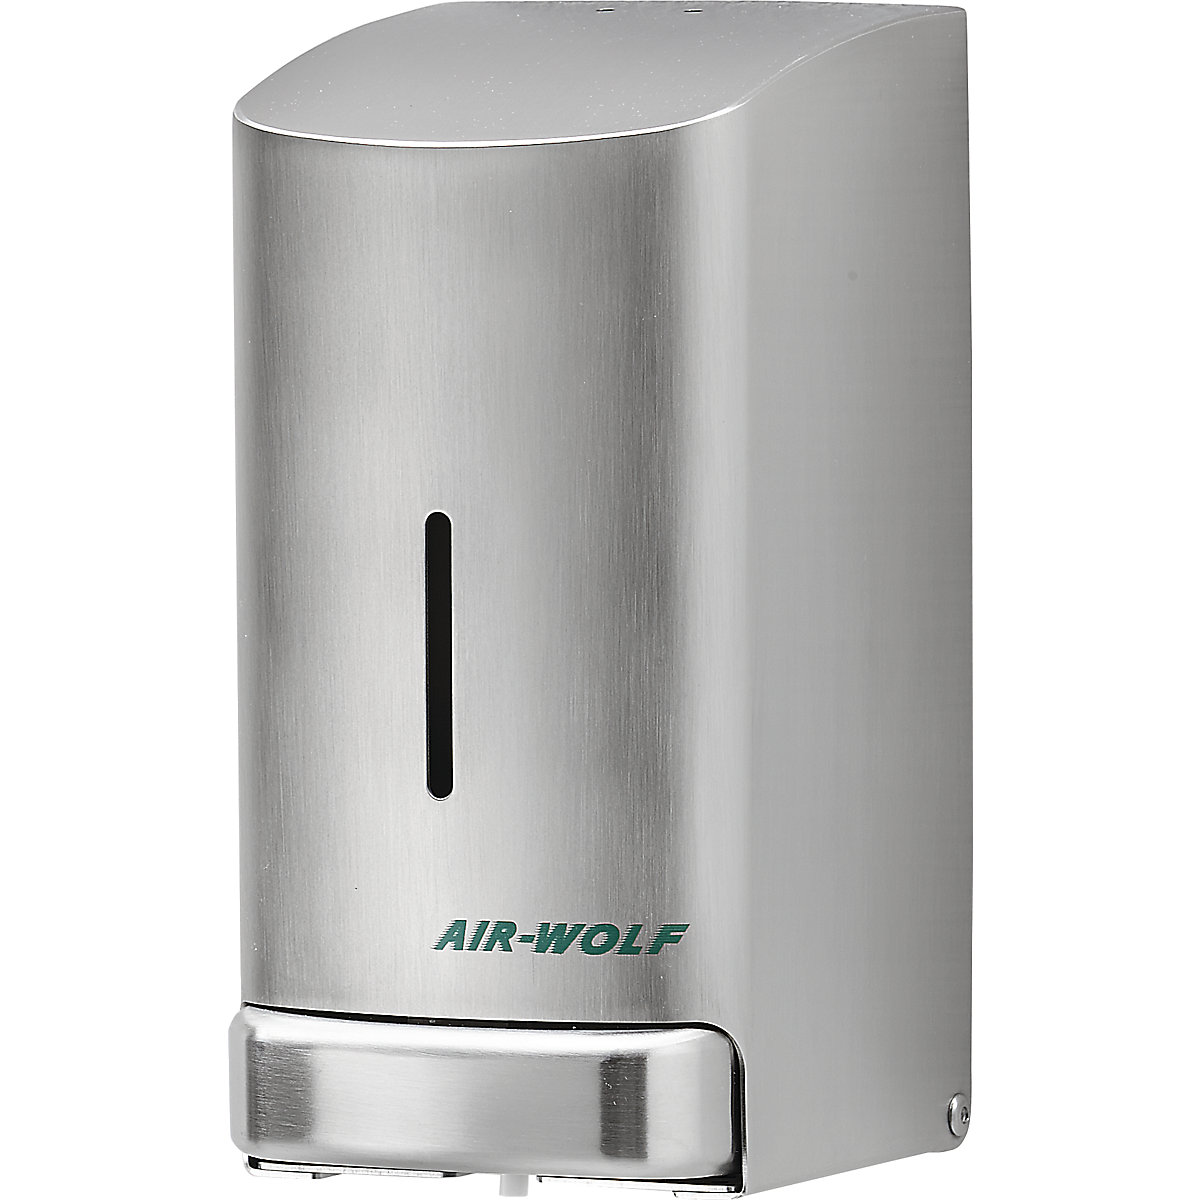 AIR-WOLF – Dozator de săpun din inox, capacitate 0,8 l, inox, periat